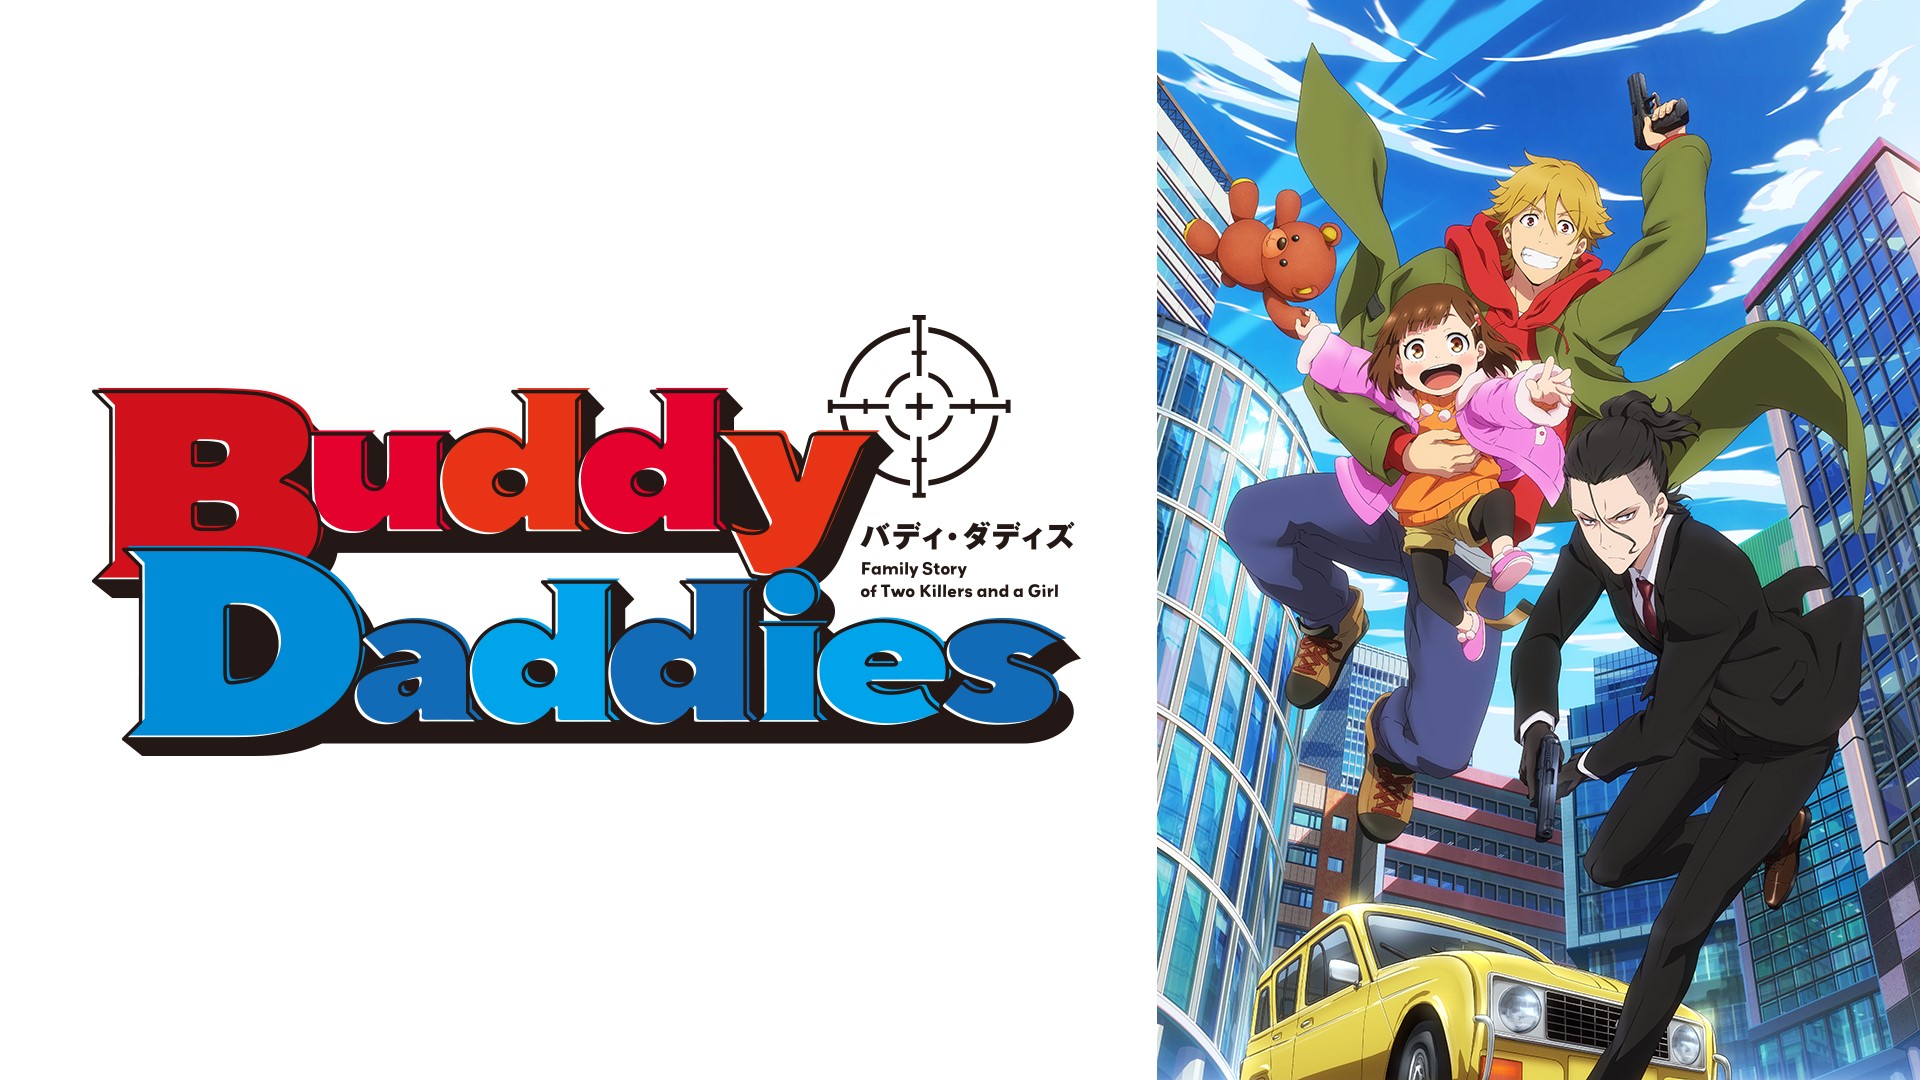 Buddy Daddies